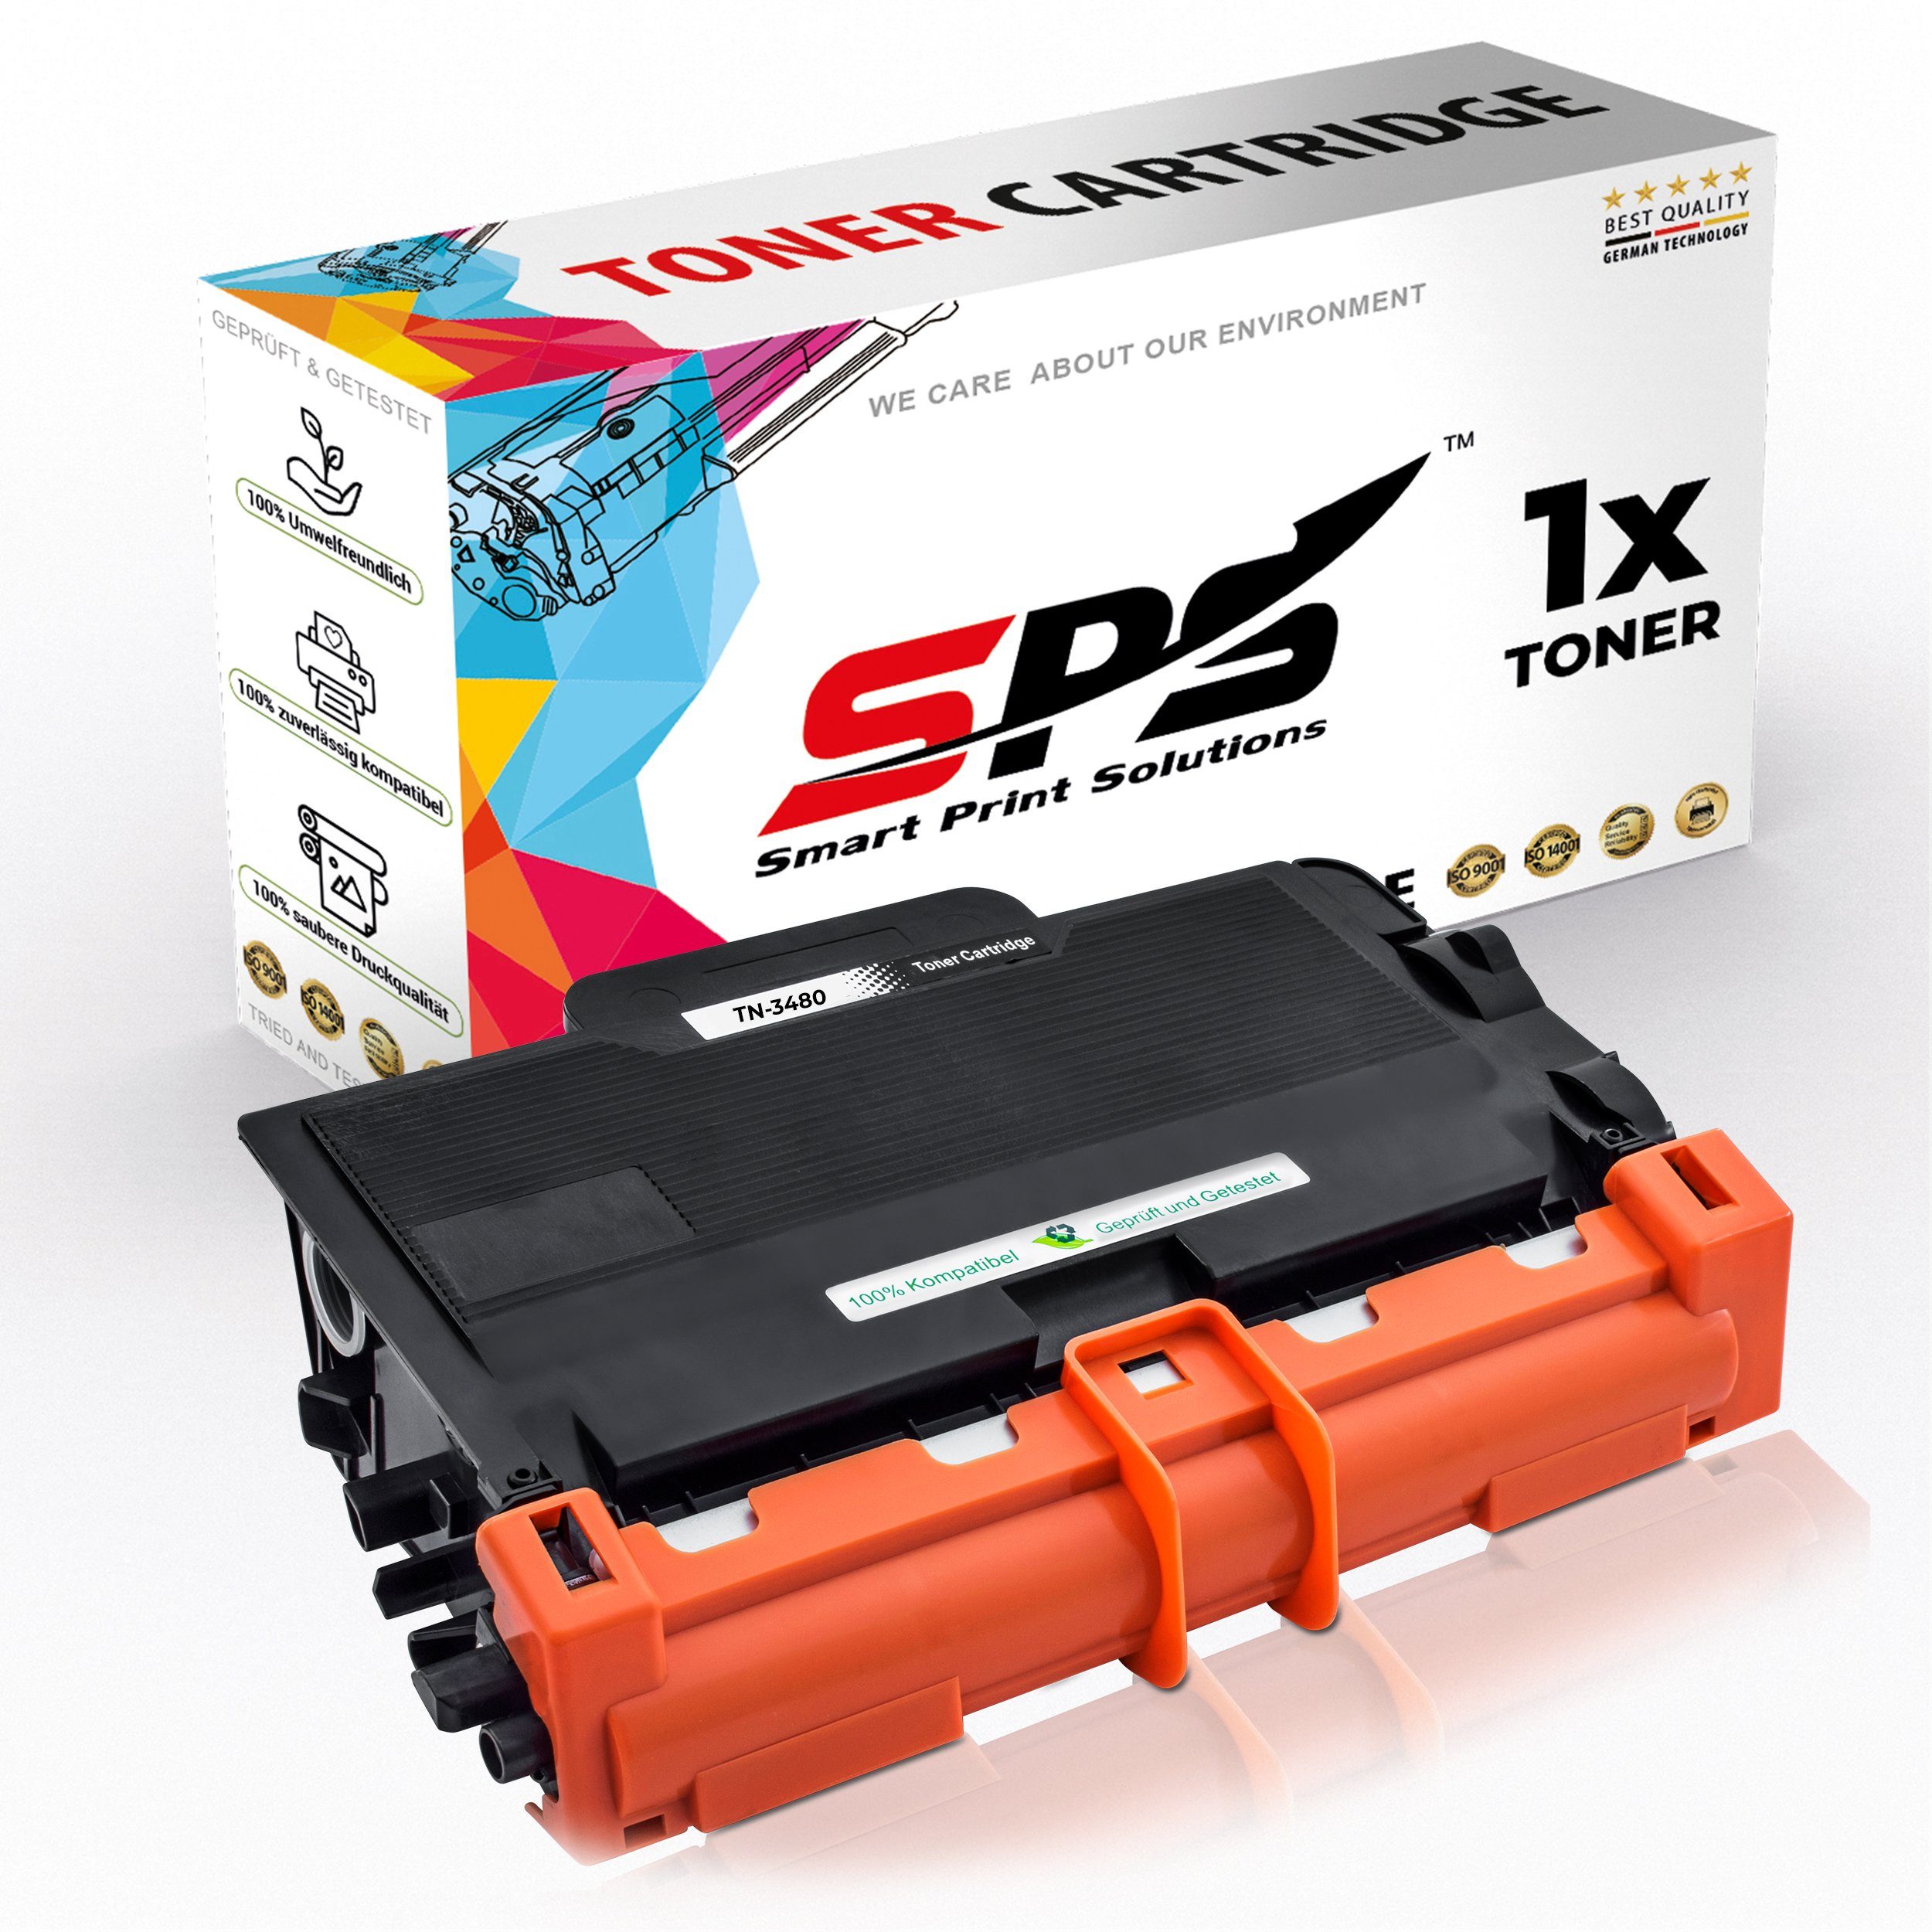 SPS Tonerkartusche Kompatibel für Brother HL-L5200 TN-3430, (1er Pack) | Tonerpatronen